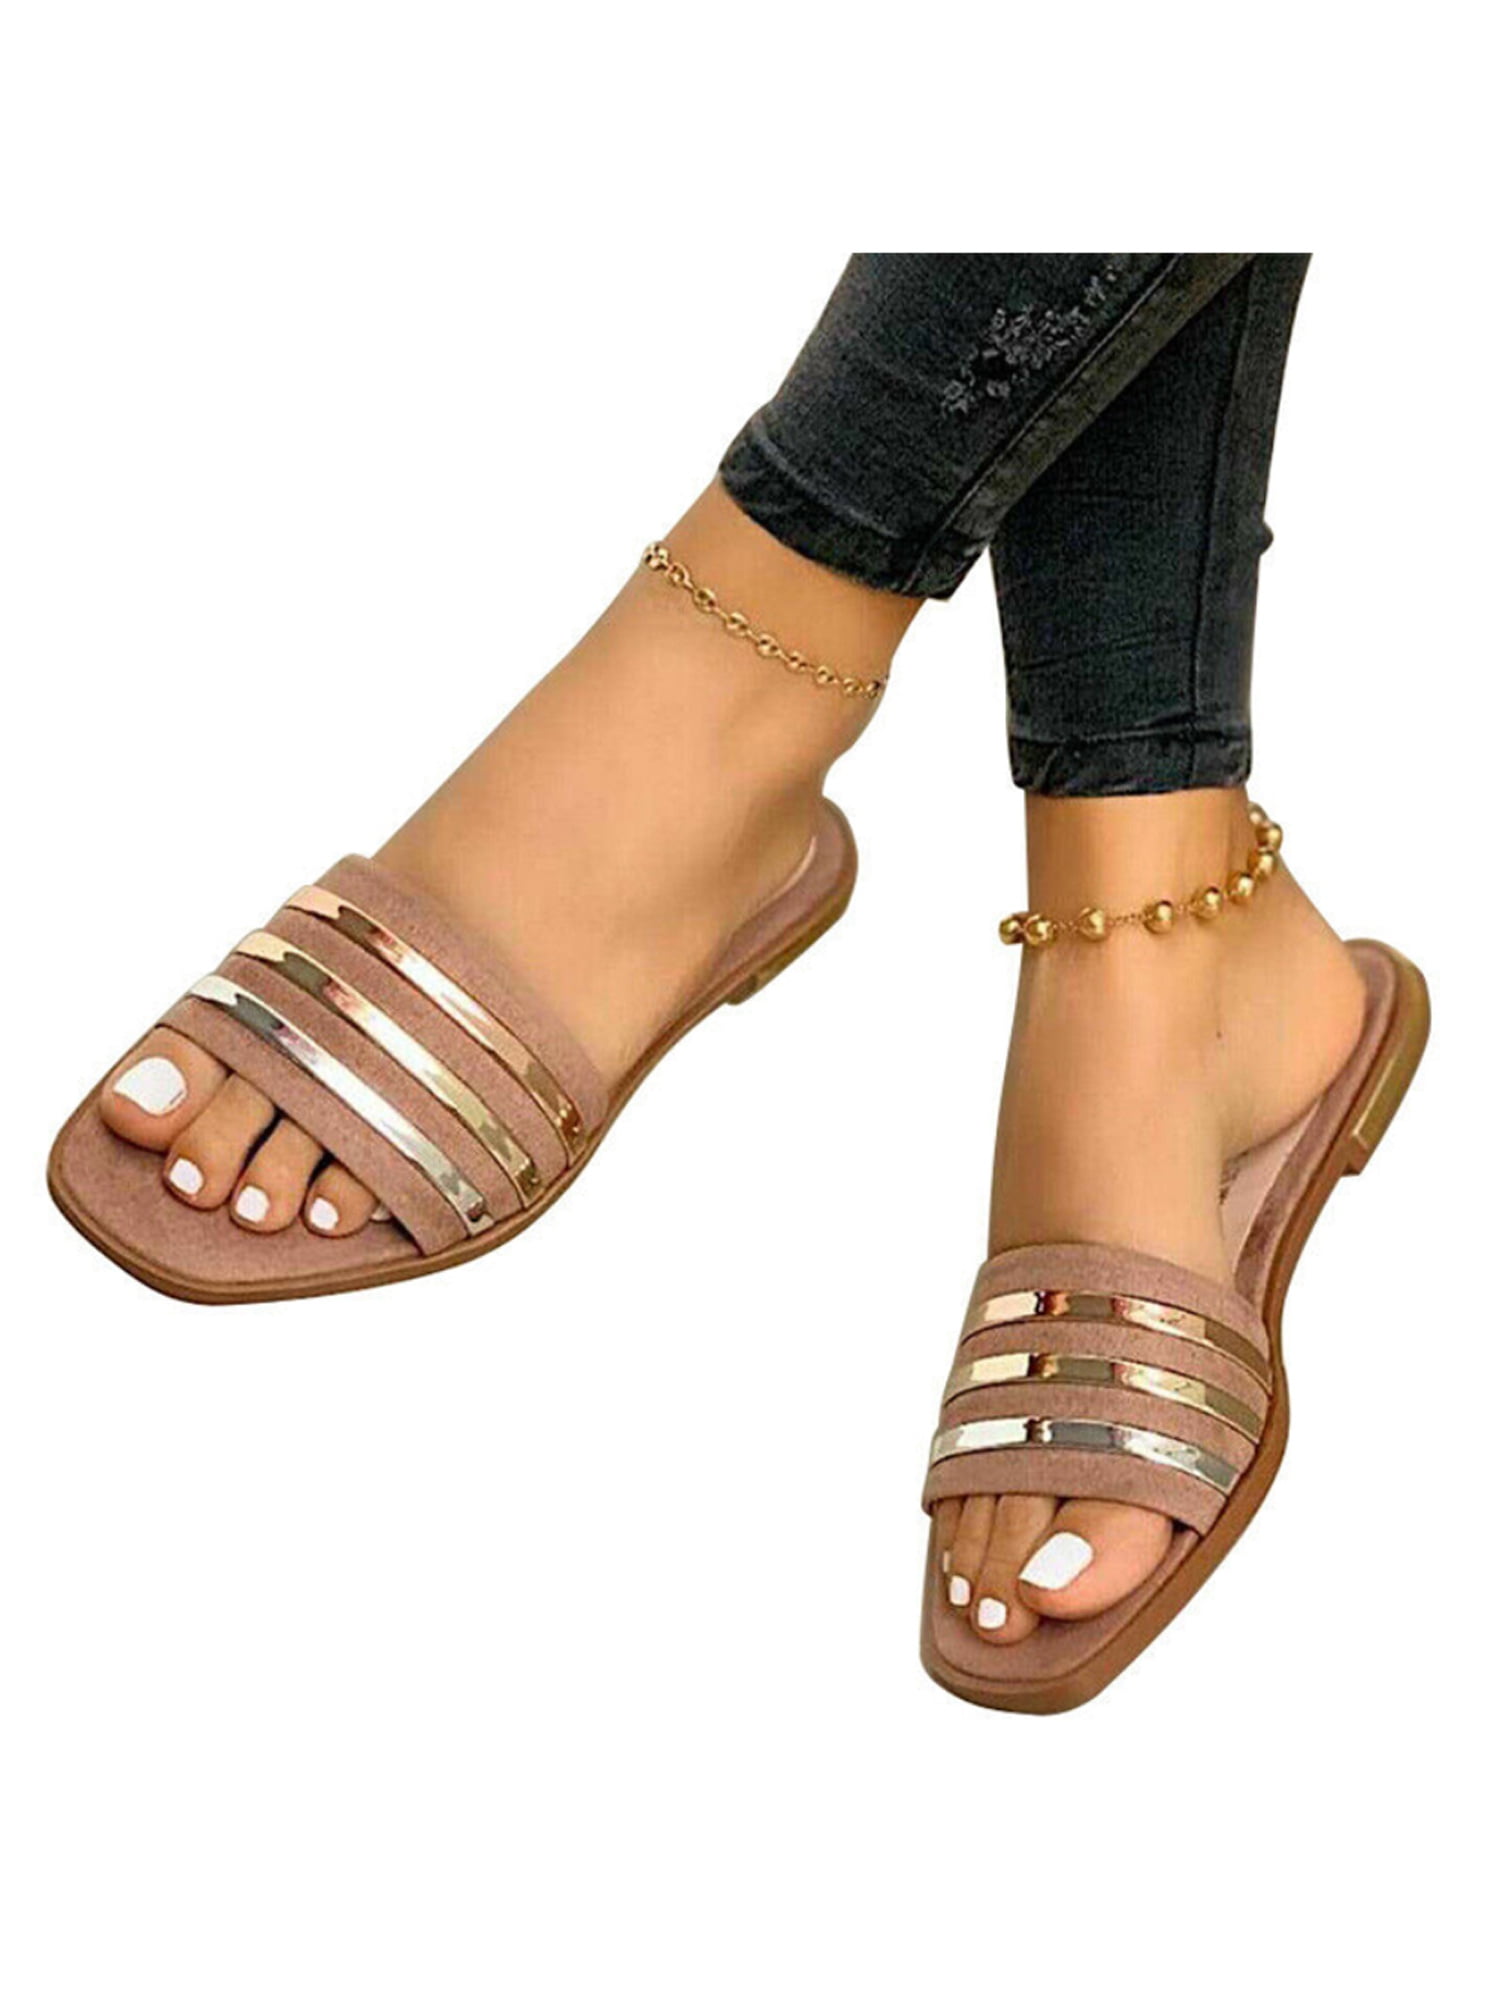 wlczzyn Womens Sandals Bowknot Flat Sandals Casual Summer Dressy Travel Beach Boho Slippers Sandals for Women Flip Flops 